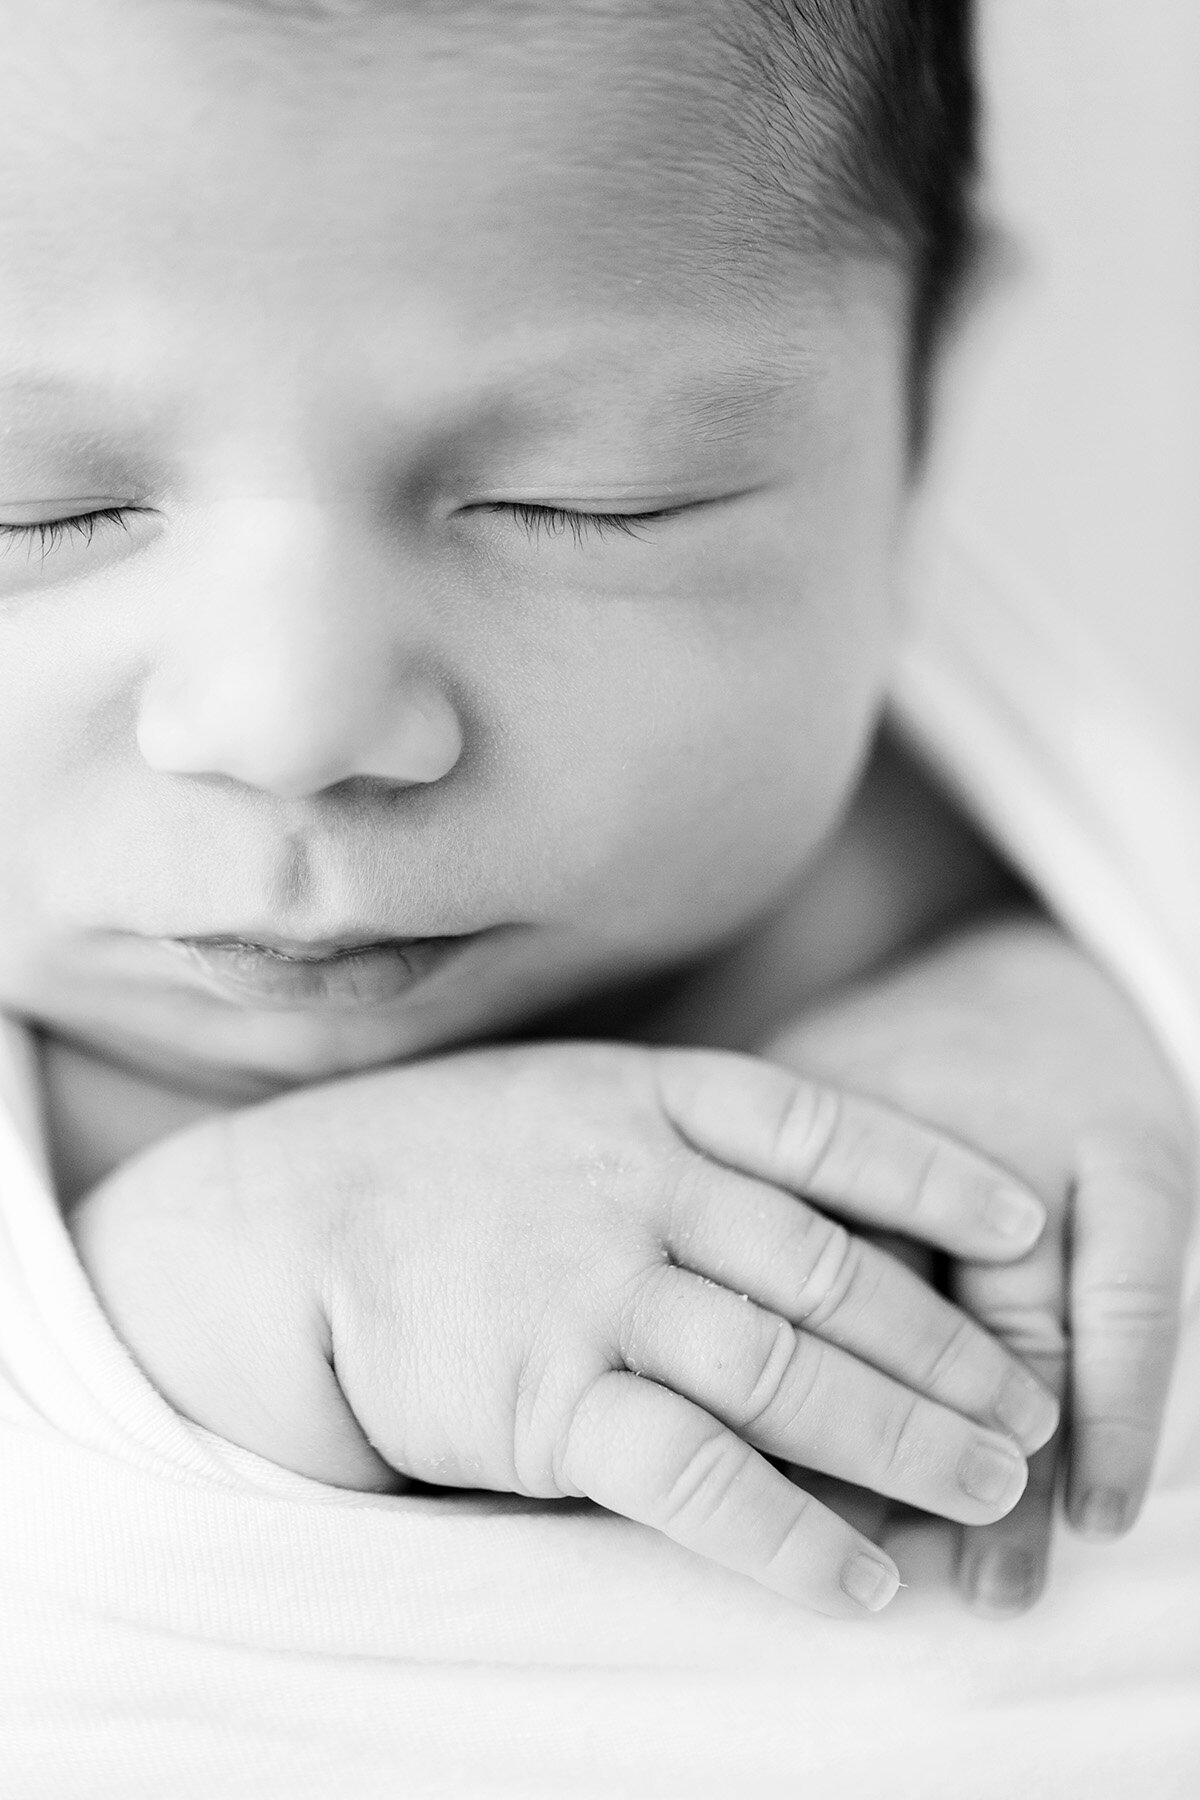 top-louisville-ky-newborn-photographer-family-maternity-child-photo shoot-judie-brock-photography-black-and-white-newborn-studio-southern-indiana